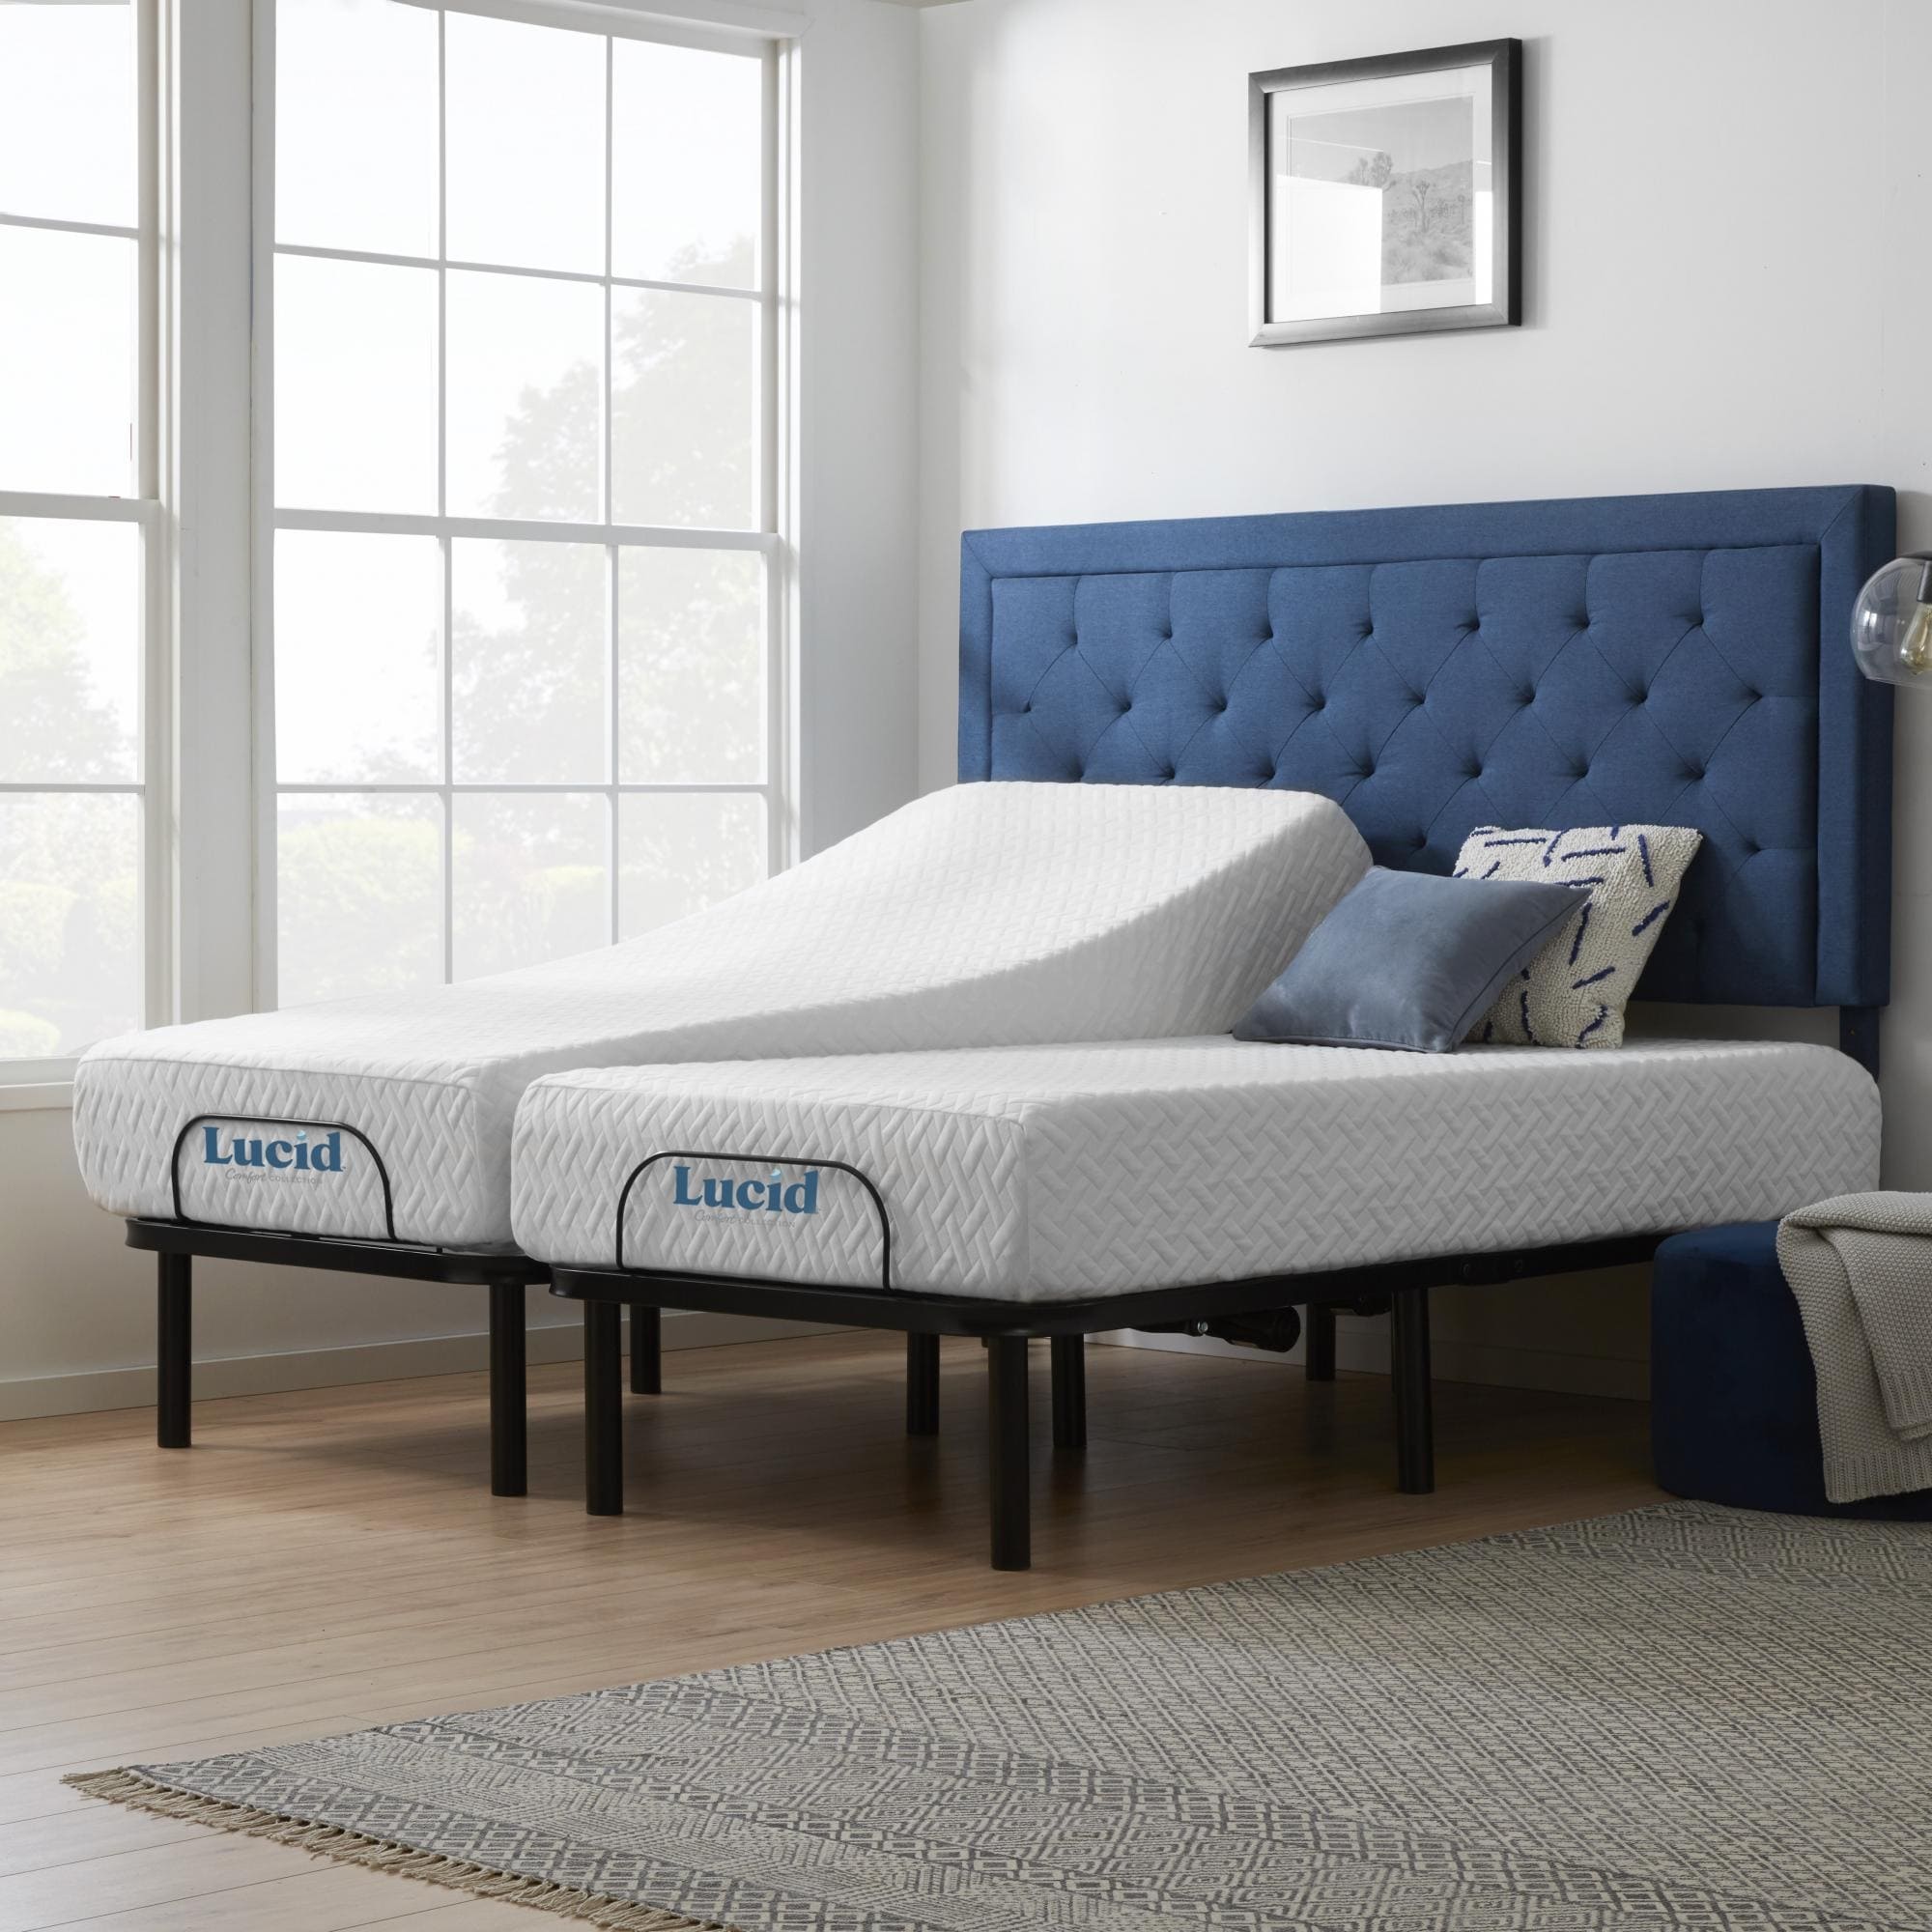 Lucid Comfort Collection Adjustable Bed Sets